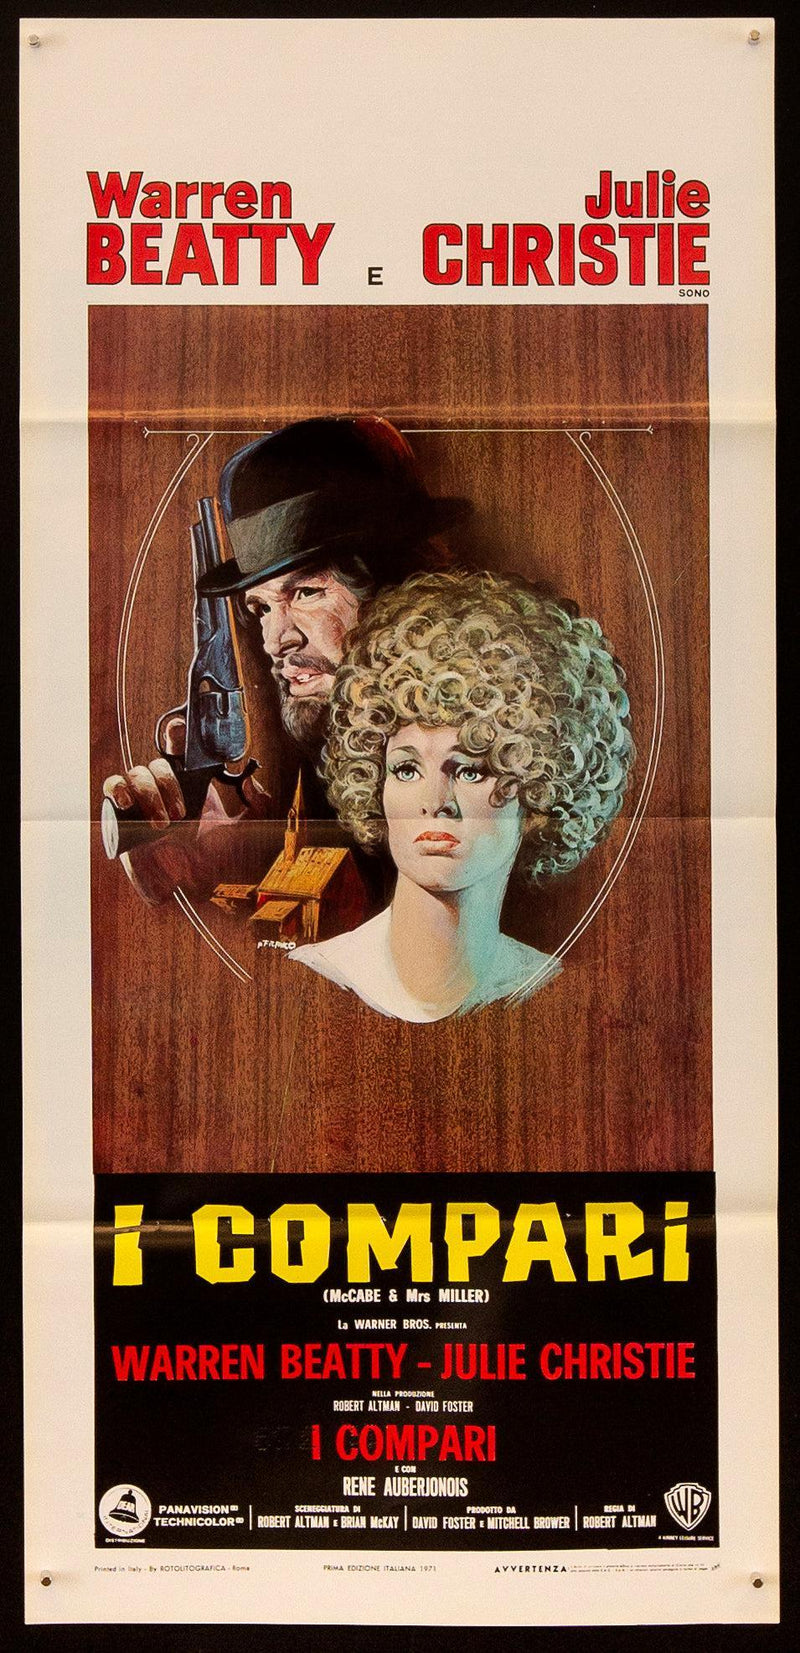 McCabe and Mrs. Miller Italian Locandina (13x28) Original Vintage Movie Poster